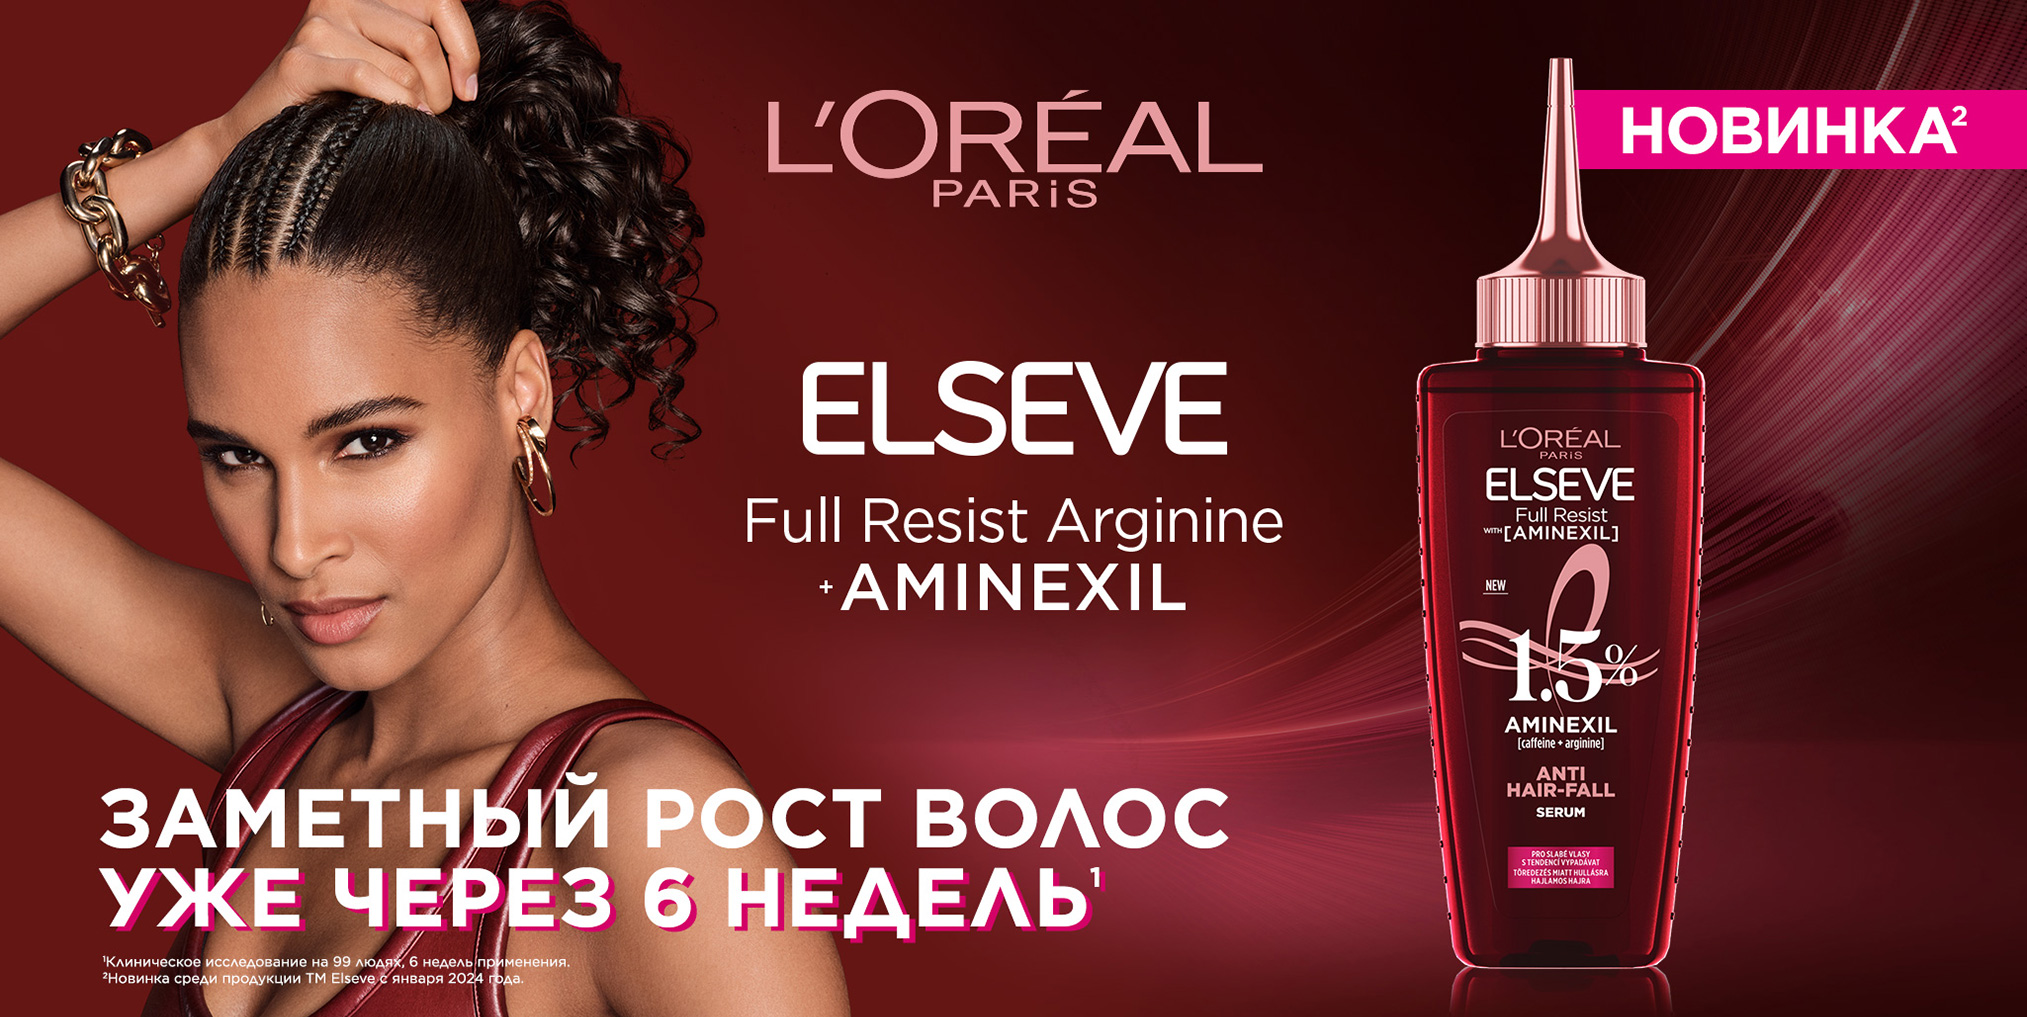 L'Oreal Paris Elseve Full Resist Arginine + Aminexil